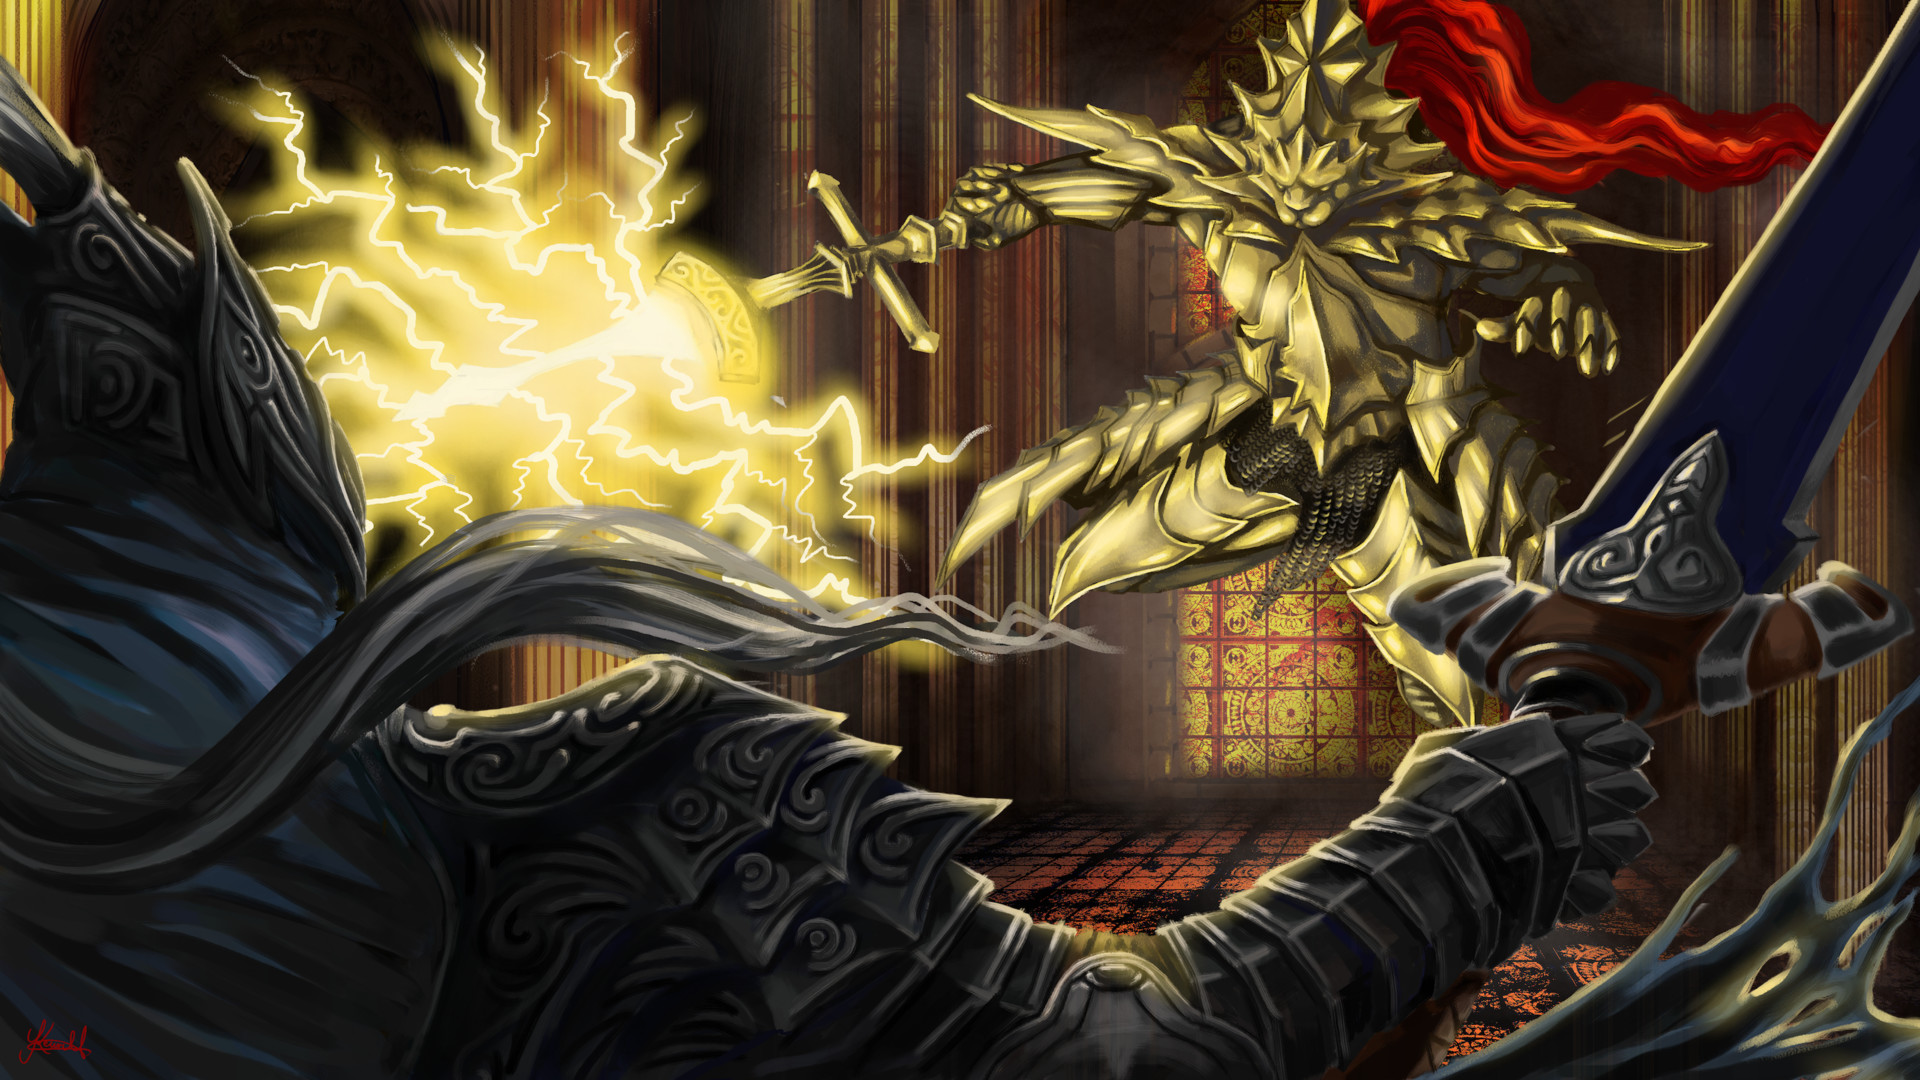 Dragon Slayer Ornstein vs. Knight Artorias. 